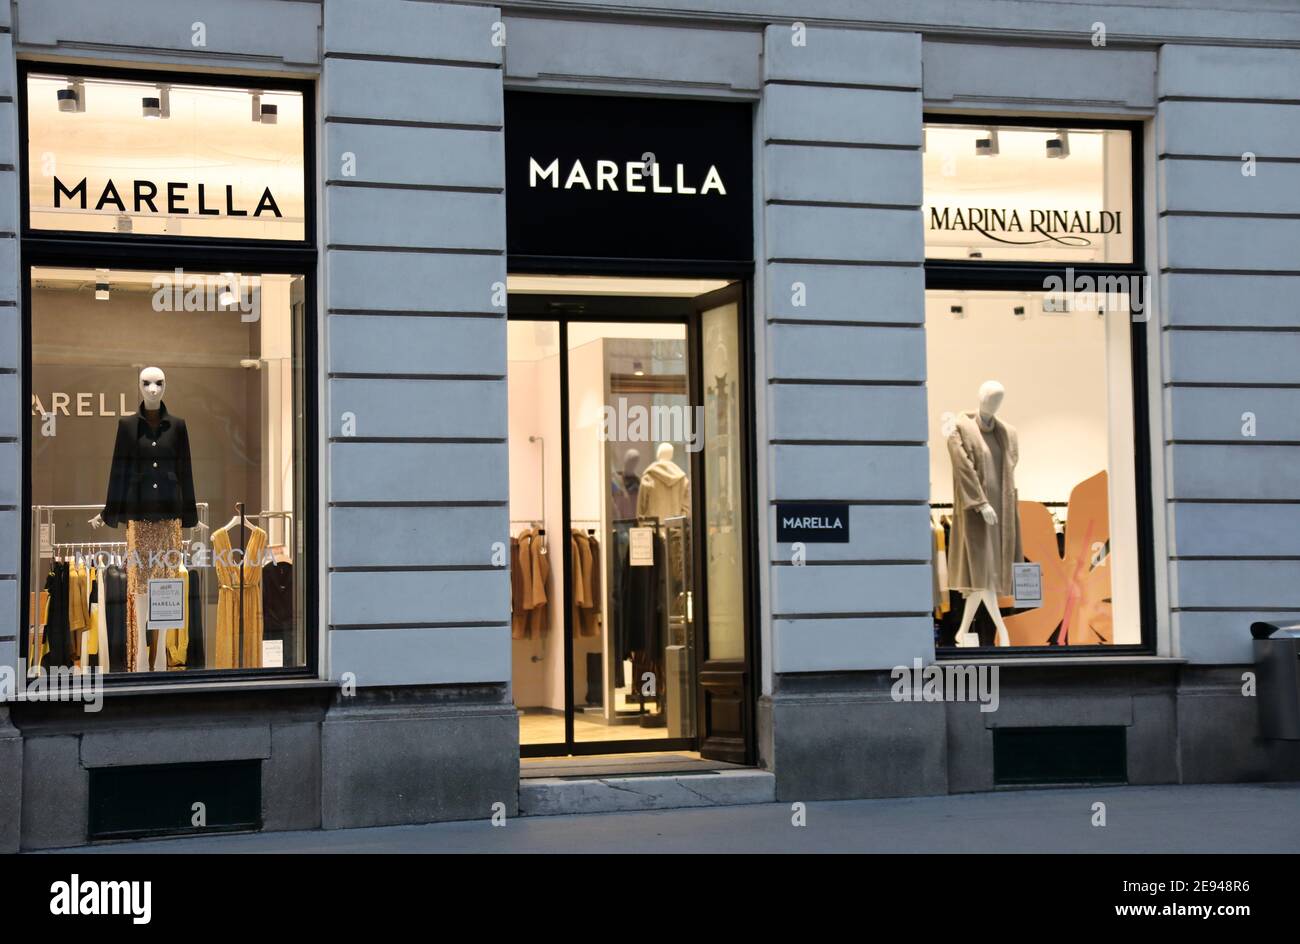 Marella store in Ljubljana Stock Photo - Alamy